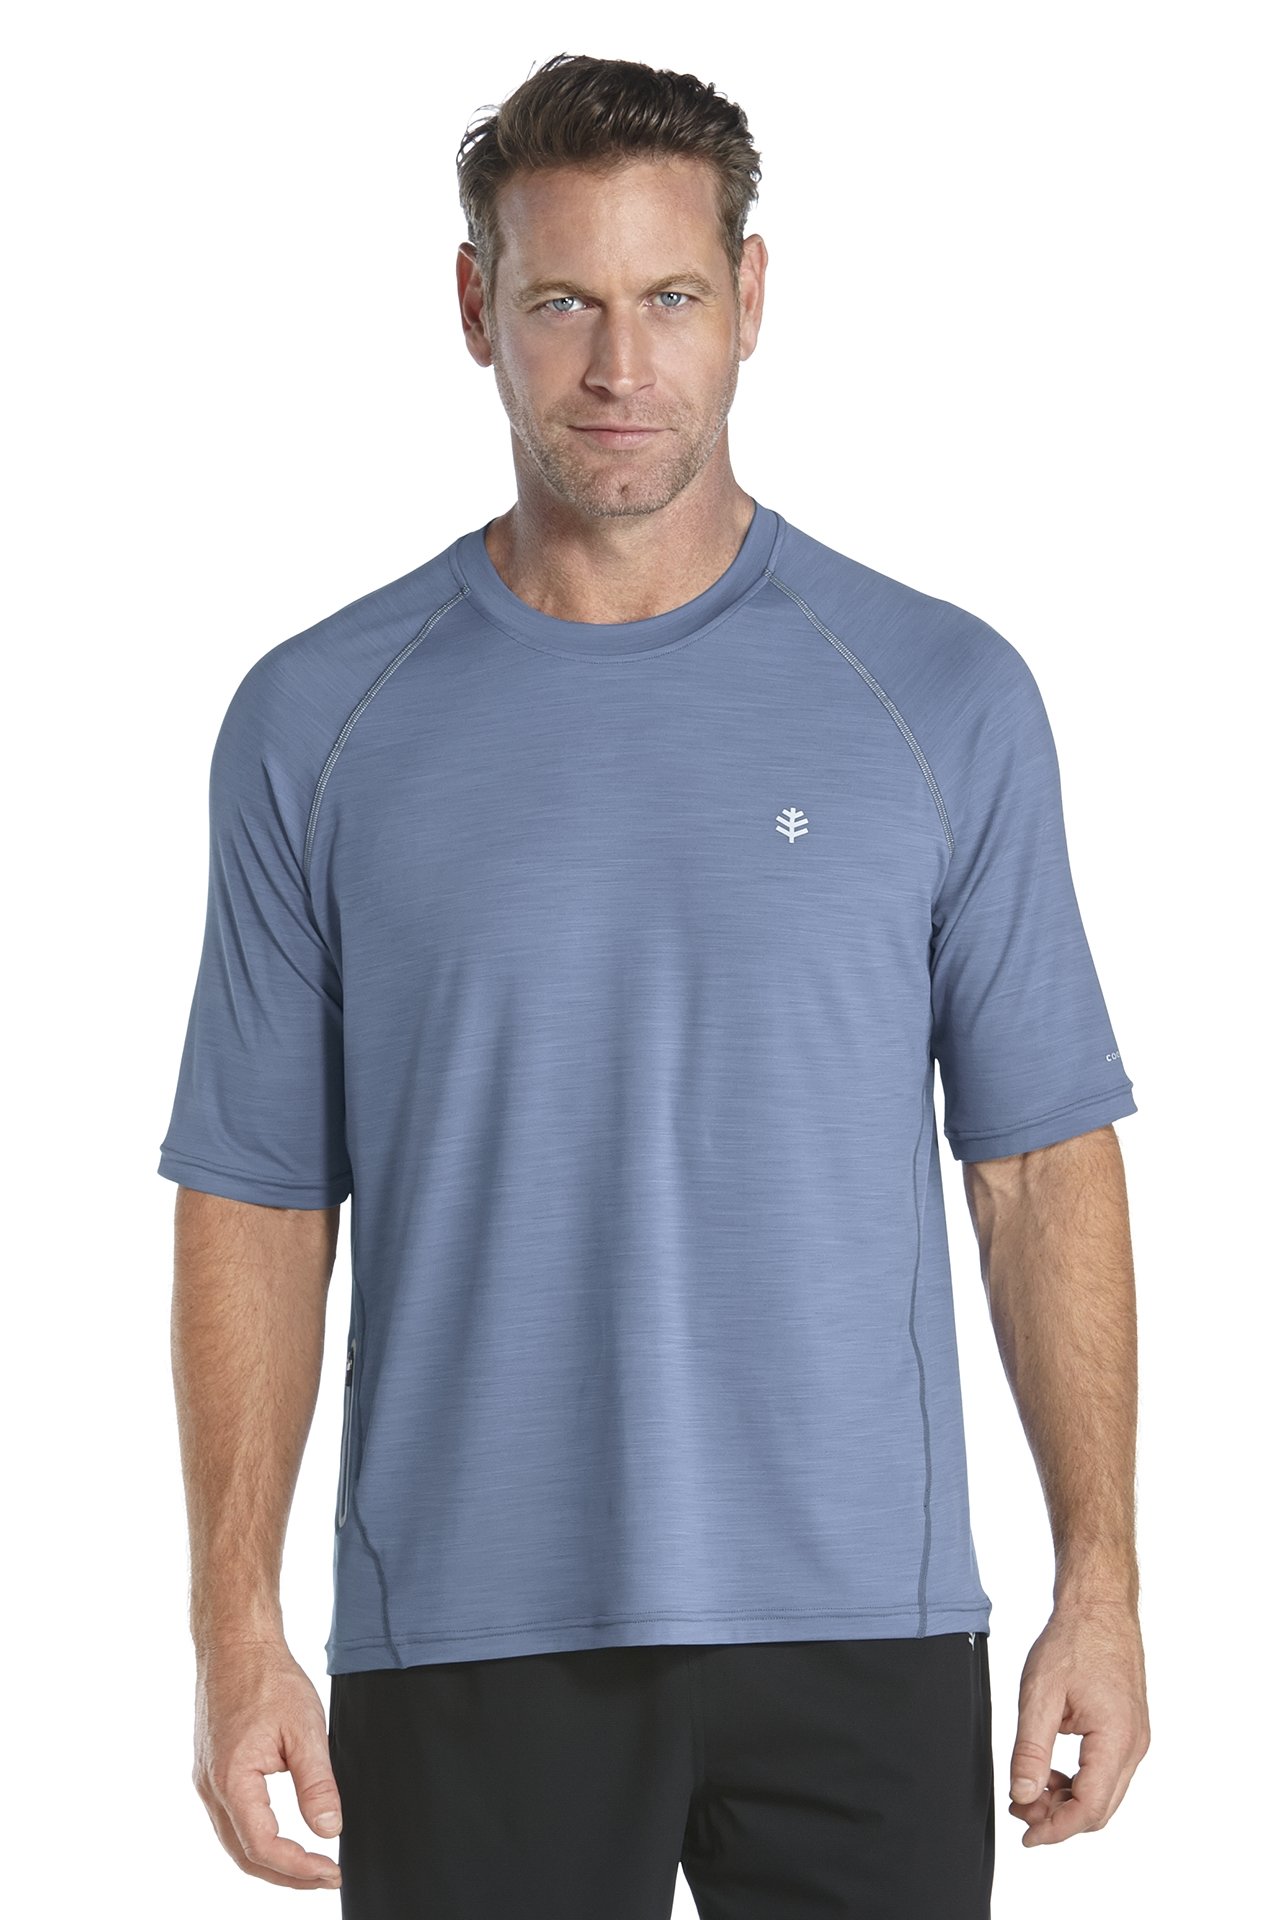 Coolibar - UV-Schutz T-Shirt Herren - blau